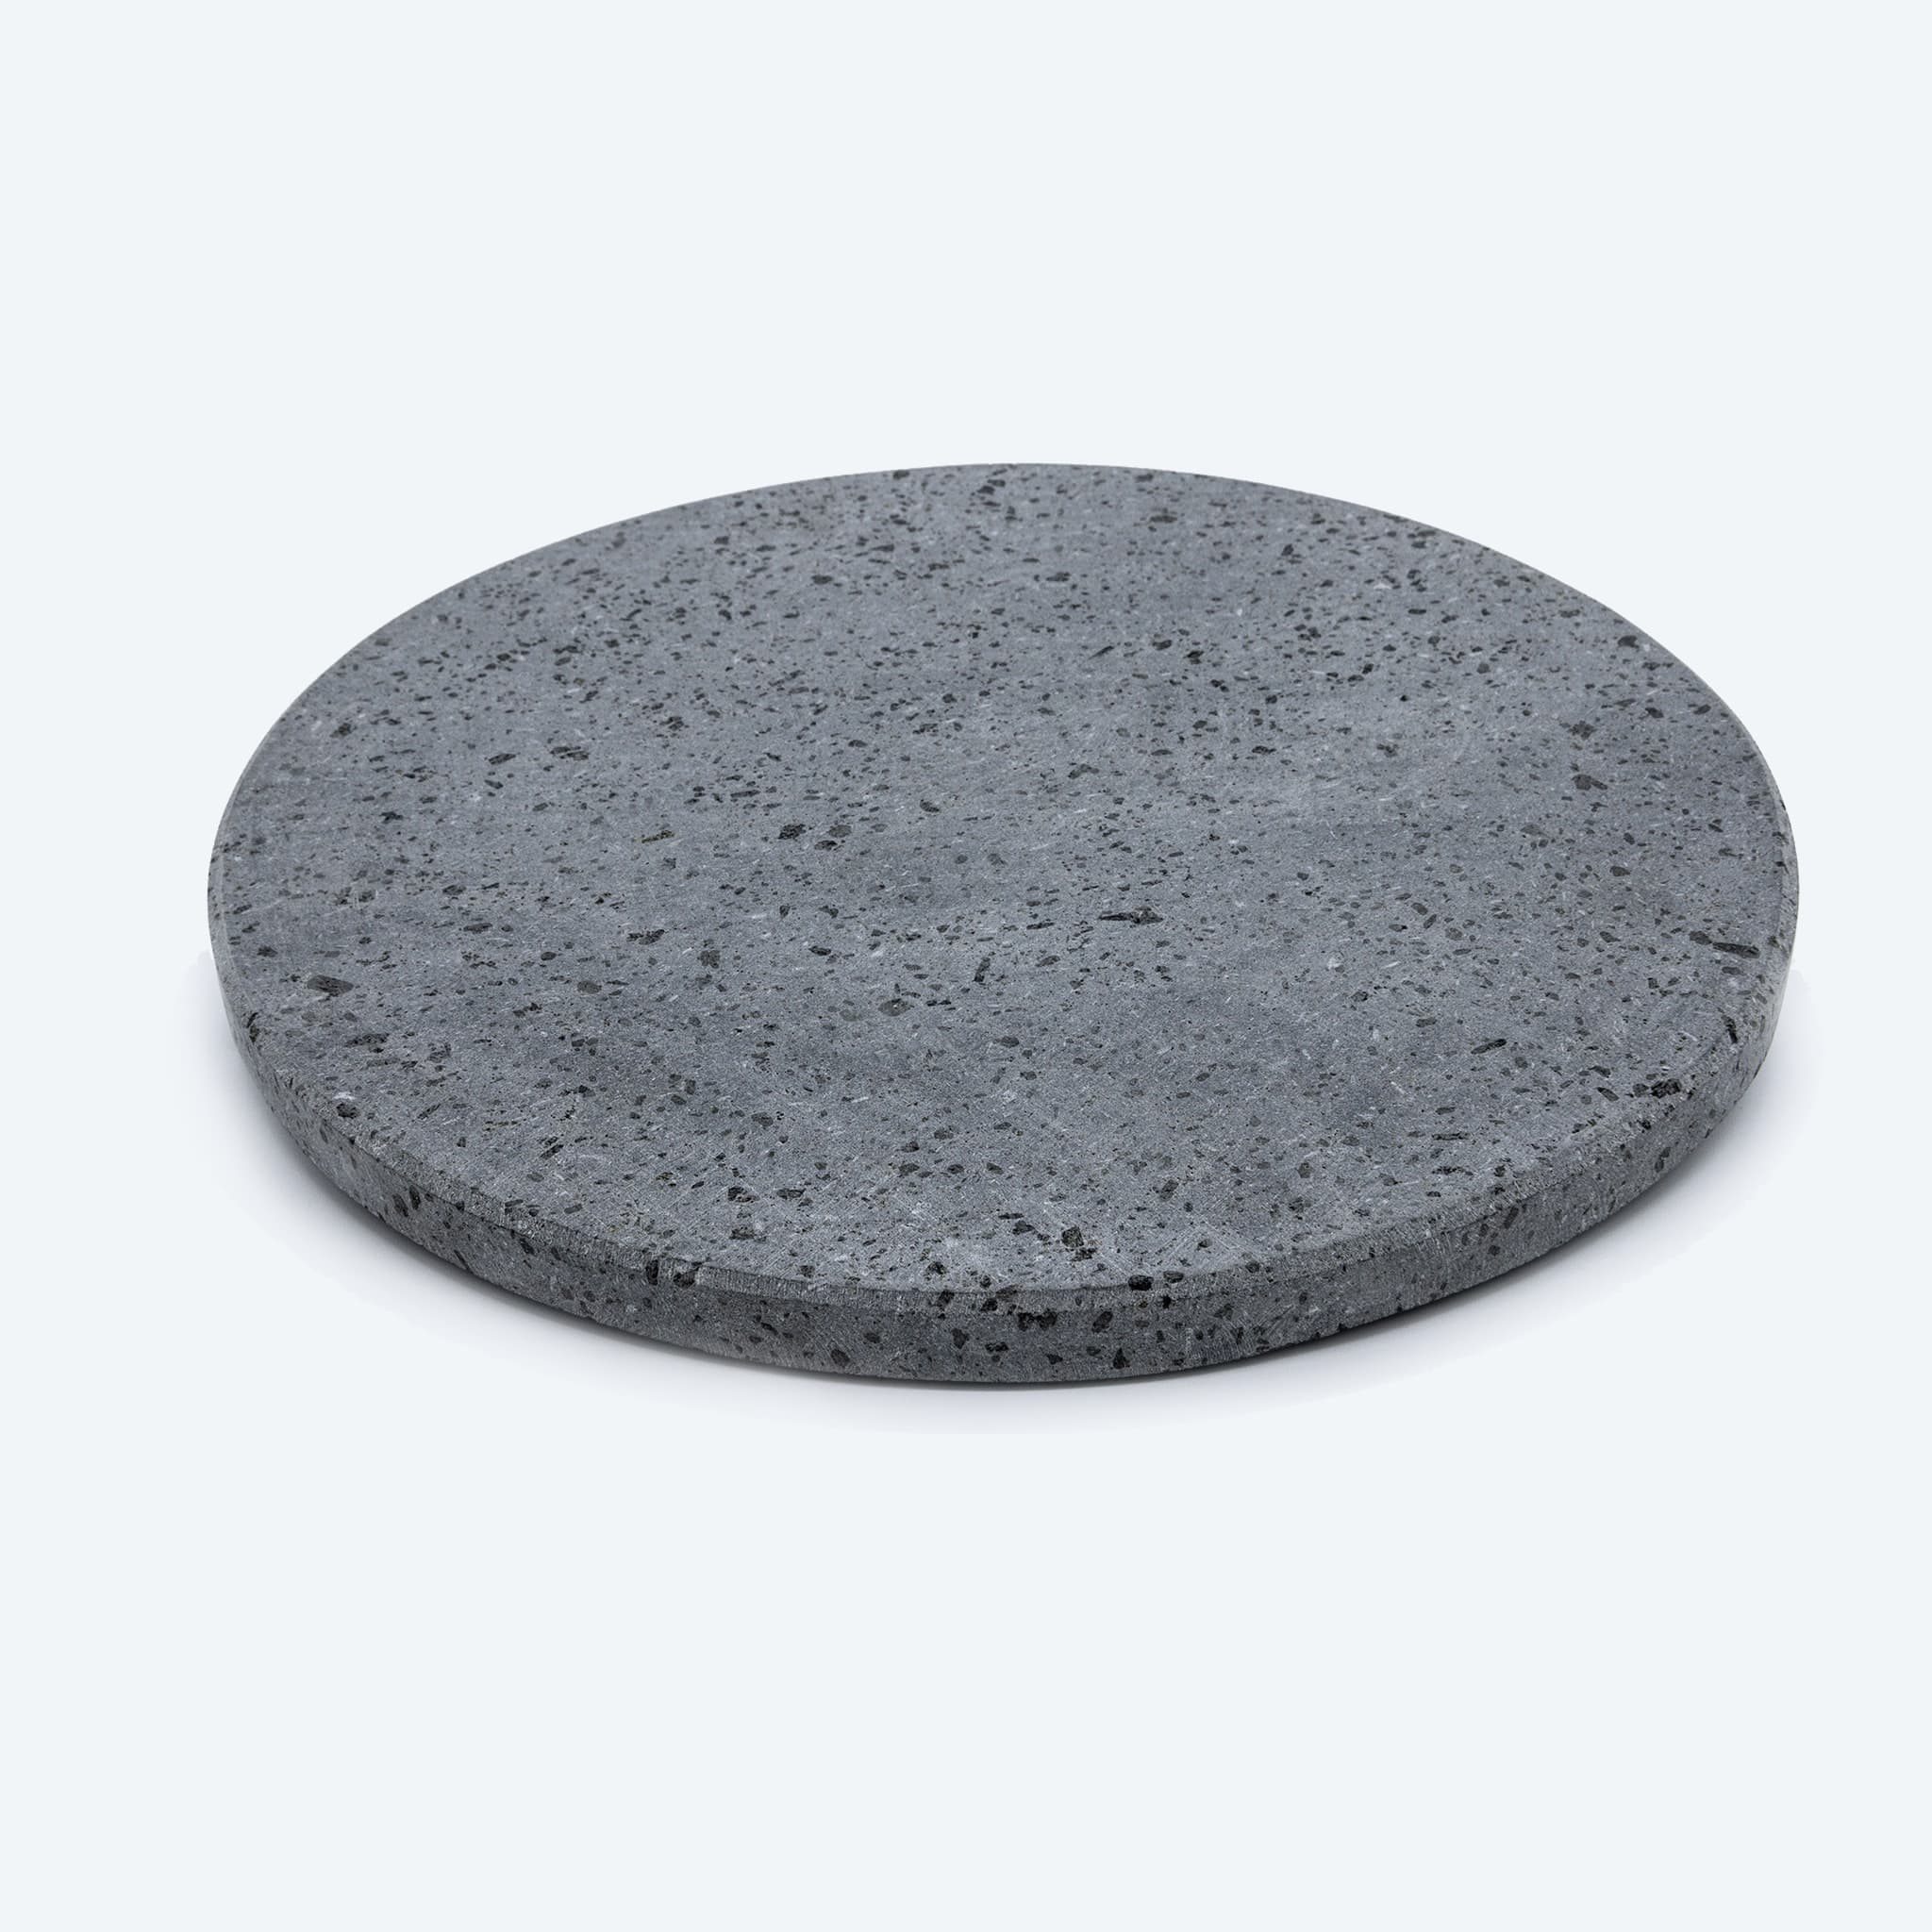 Feuerfeste Lavasteinplatte für runde Pizzen (Durchmesser 35 cm - Dicke 2  cm) - CUORE LAVICO - PIETRA LAVICA ETNEA